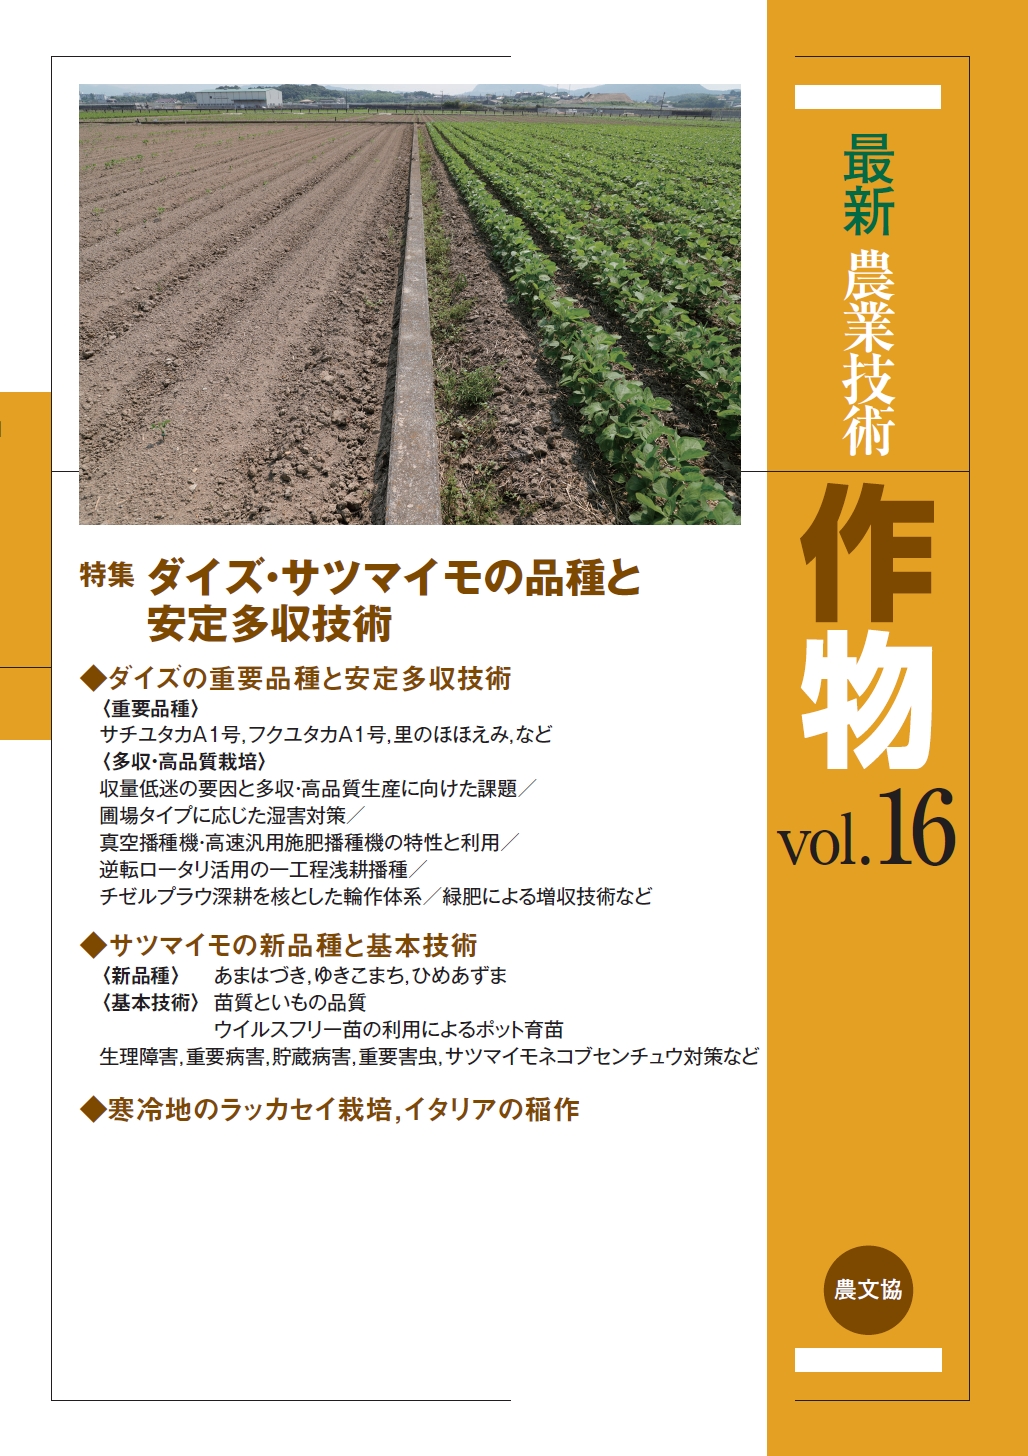 最新農業技術　作物vol.16 16の商品画像